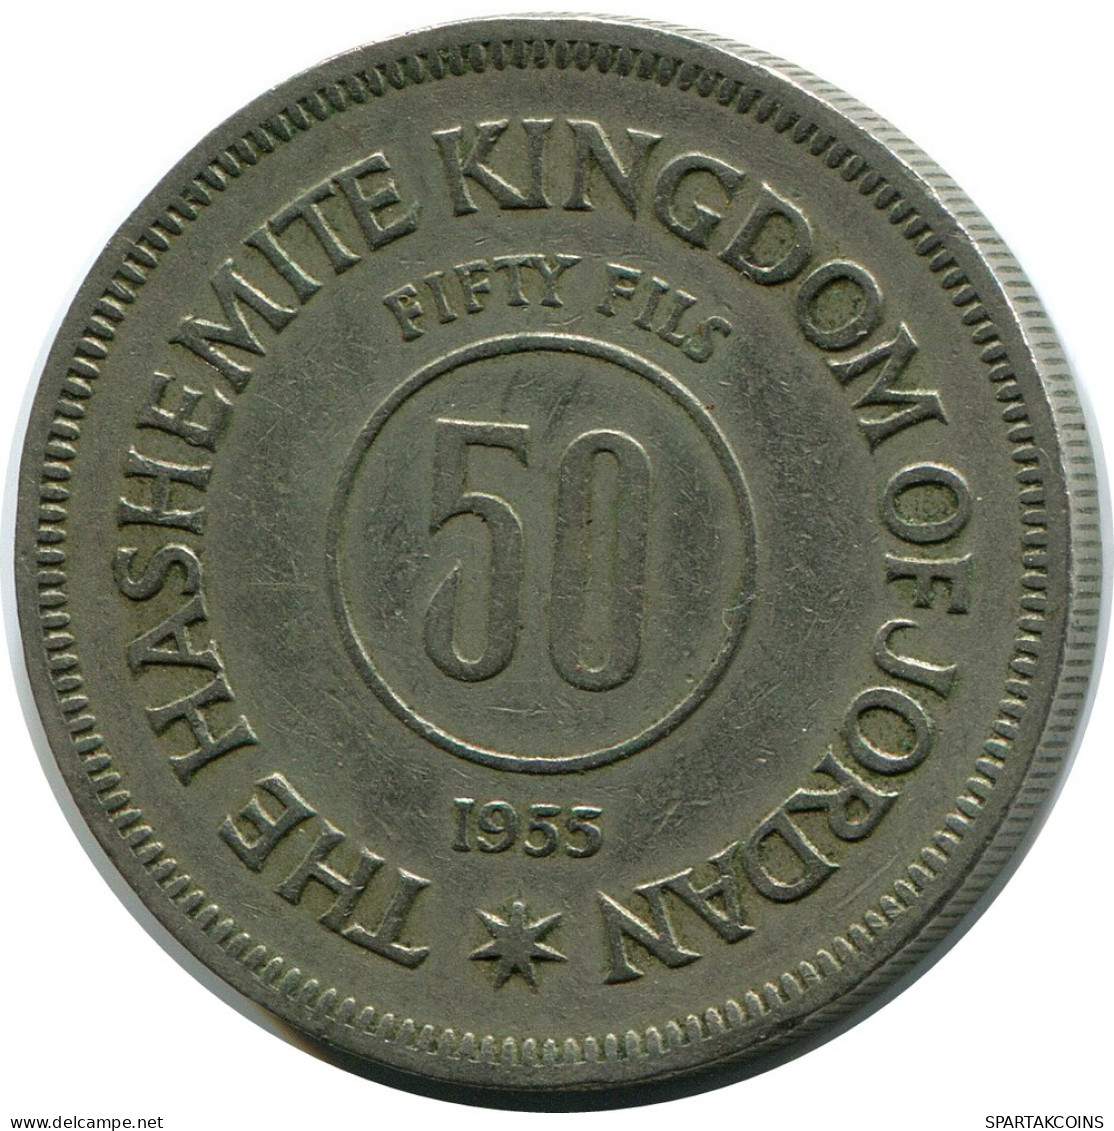 ½ DIRHAM / 50 FILS 1955 JORDAN Coin #AP066.U - Jordanie